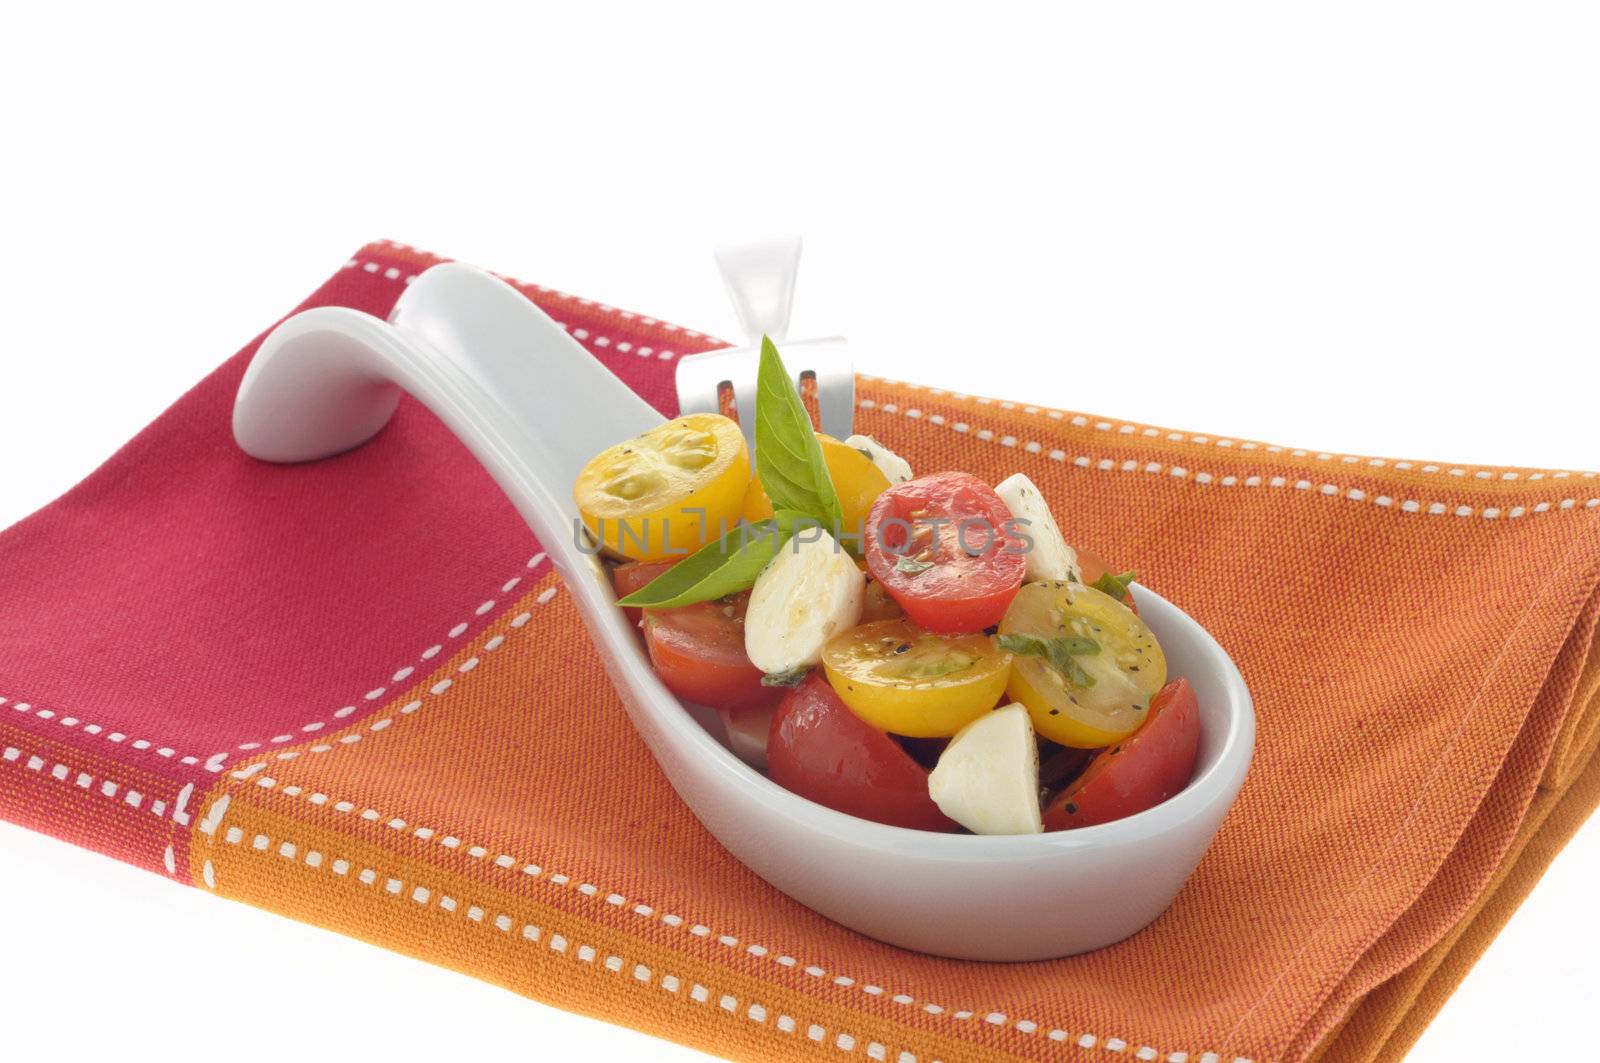 Salad of heirloom tomatoes and fresh mozzarella.